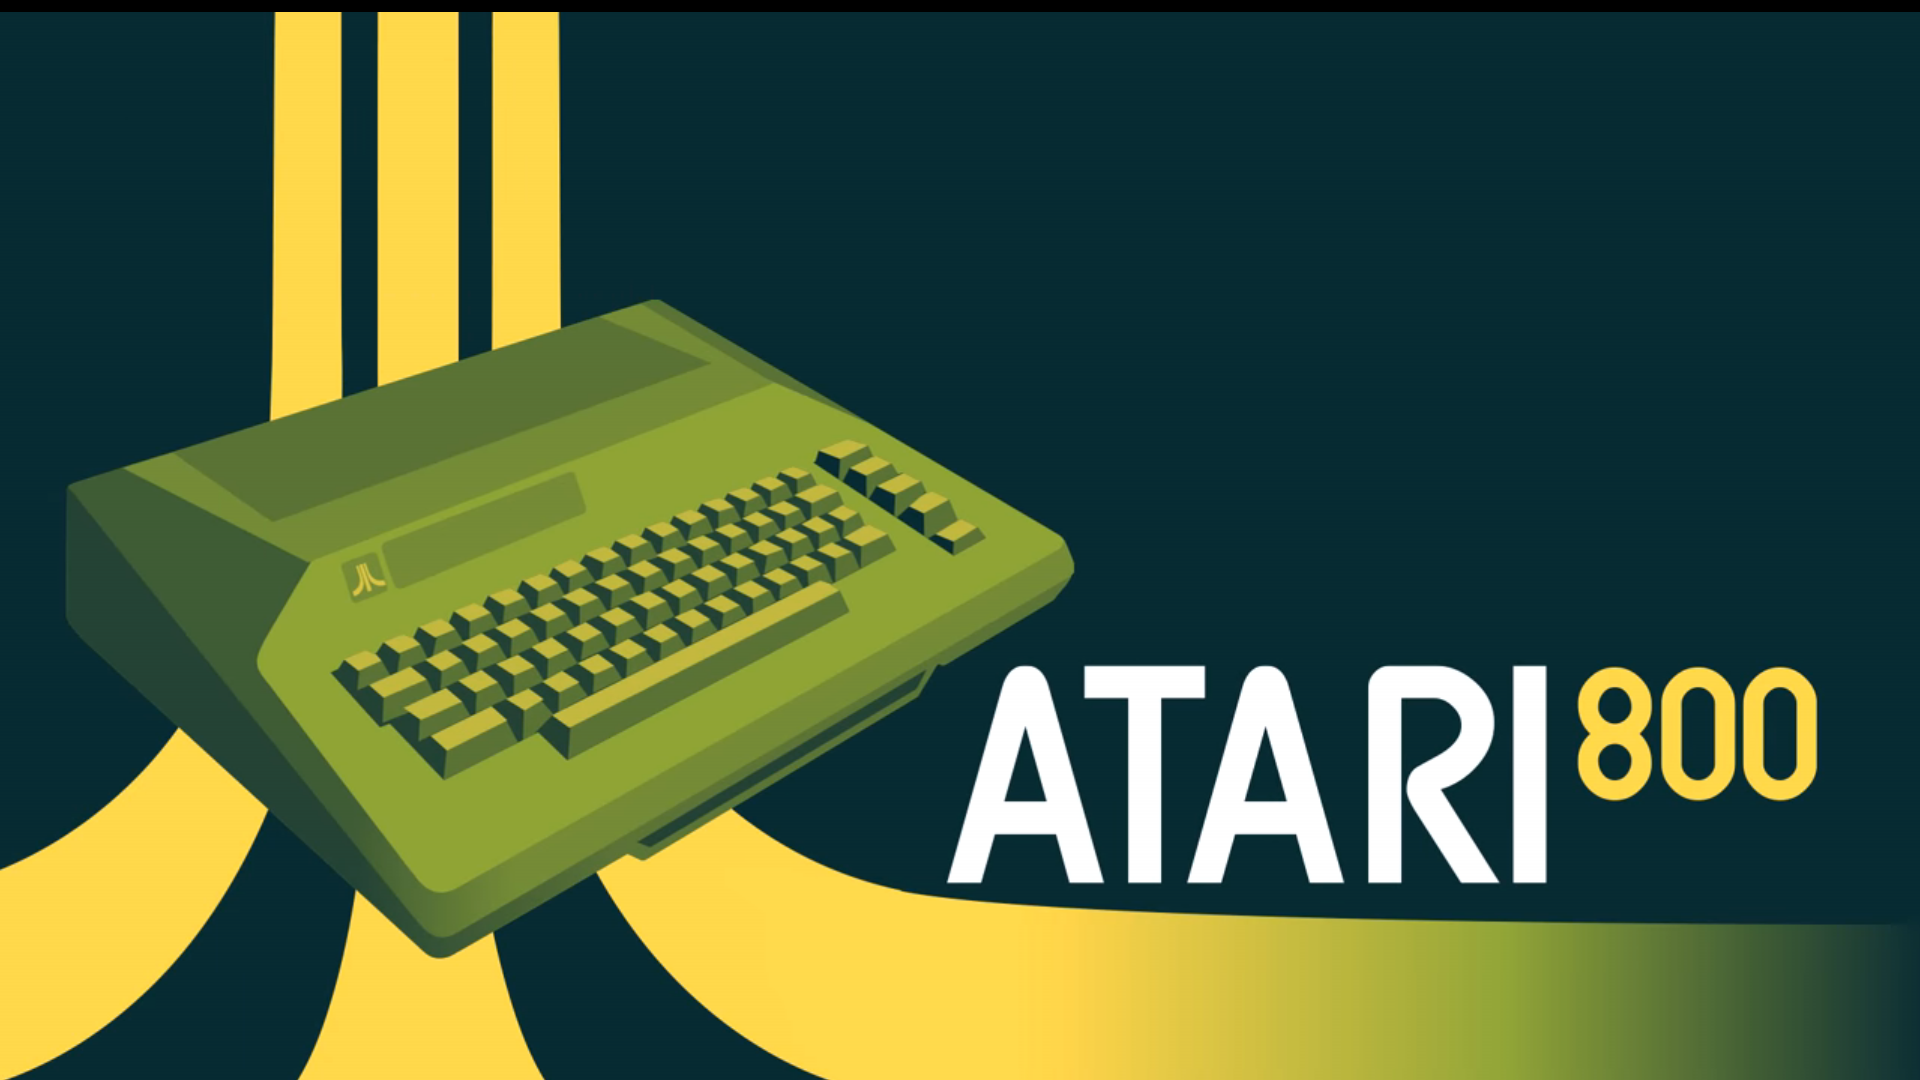 General 1920x1080 technology Retro computers Atari video games